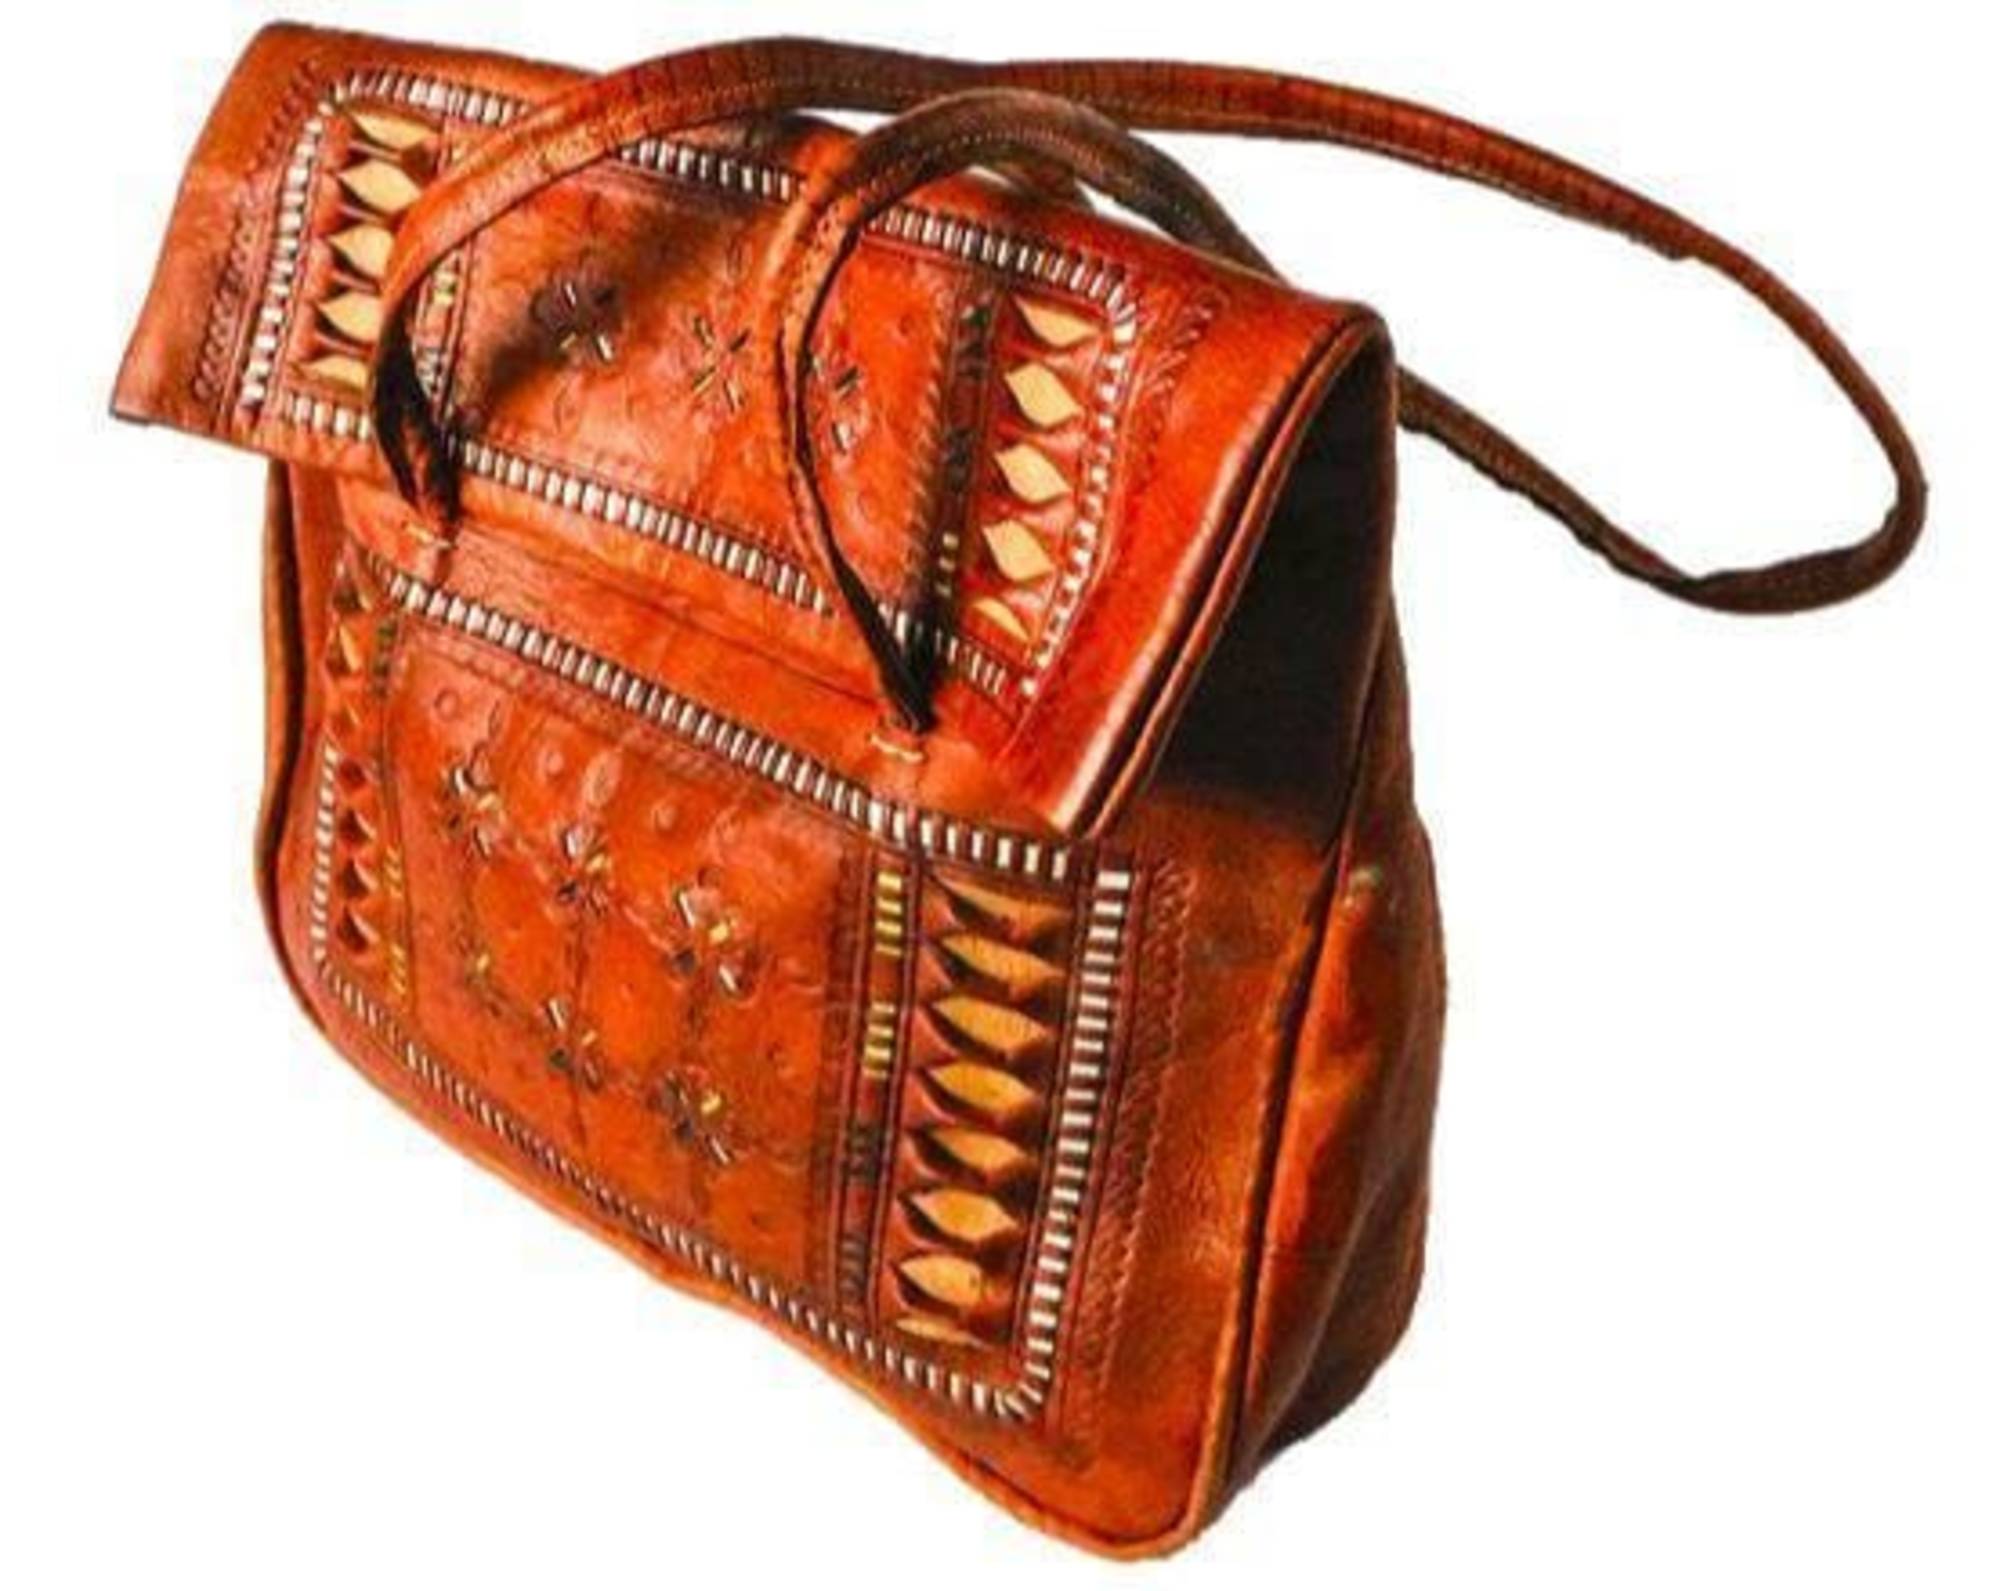 Handbag Original (100% ORI) Vintage Louis Fontaine